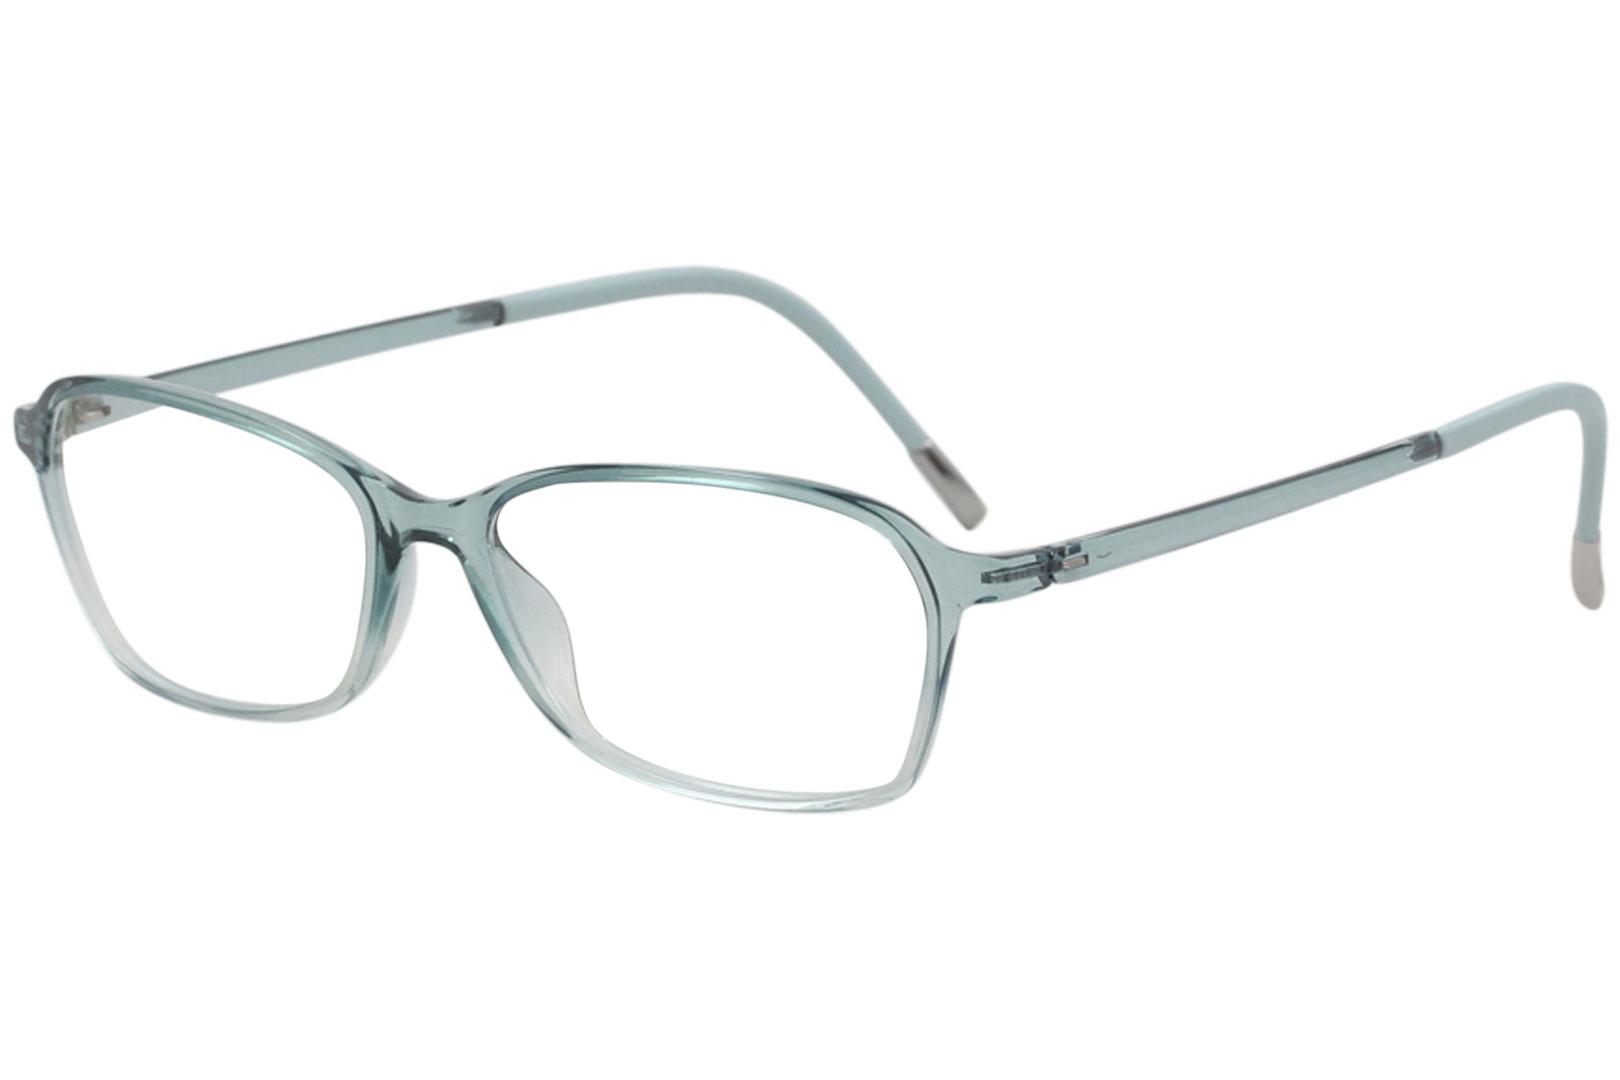 Silhouette Eyeglasses Spx Illusion 1605 1583 5010 Turquoise 52 14 